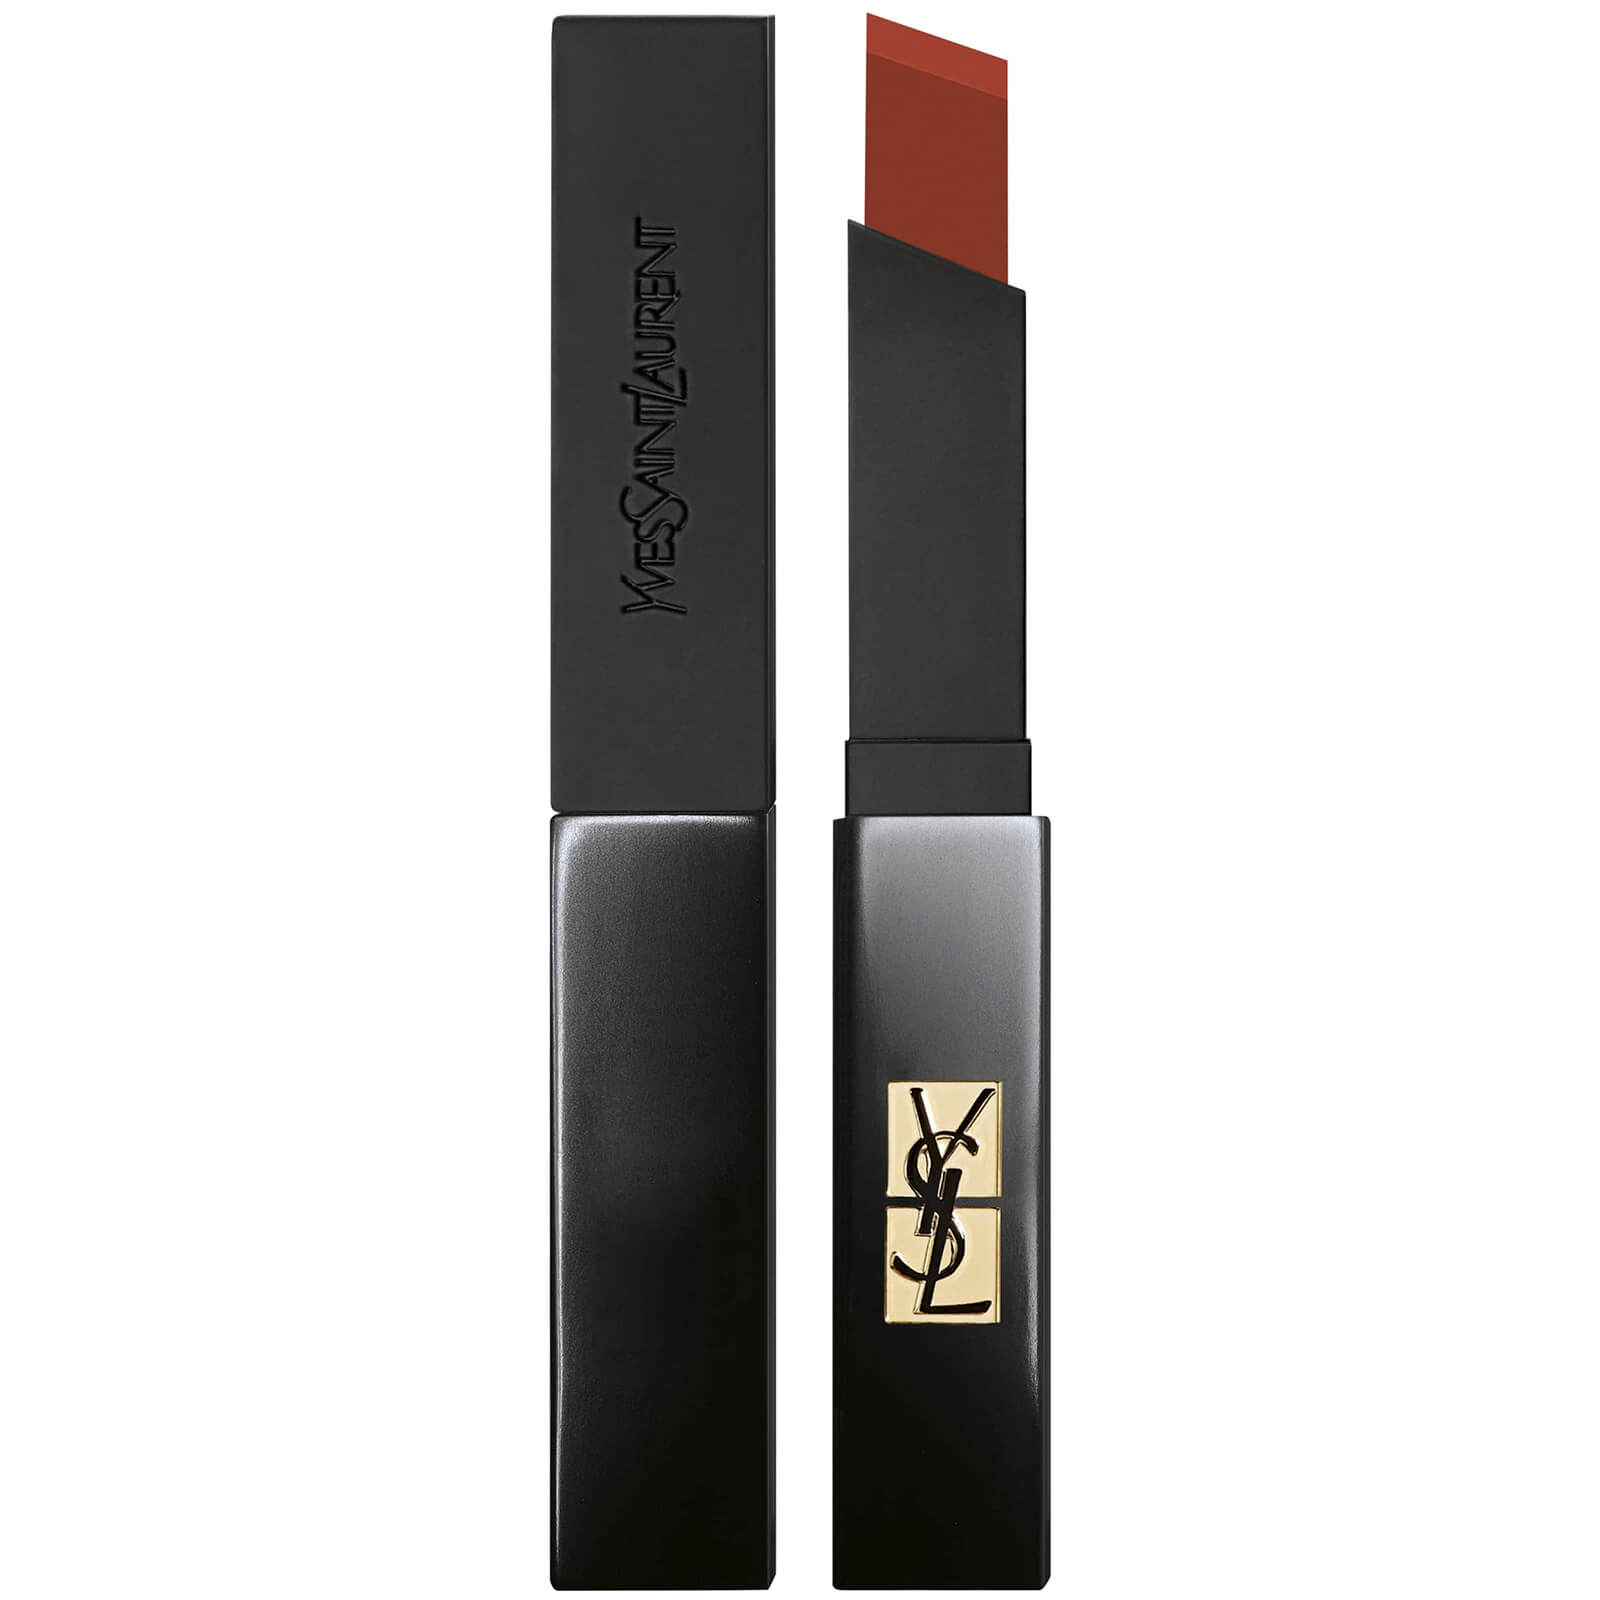 Yves Saint Laurent Rouge Pur Couture The Slim Velvet Radical Lipstick 31g (Various Shades) - 1996